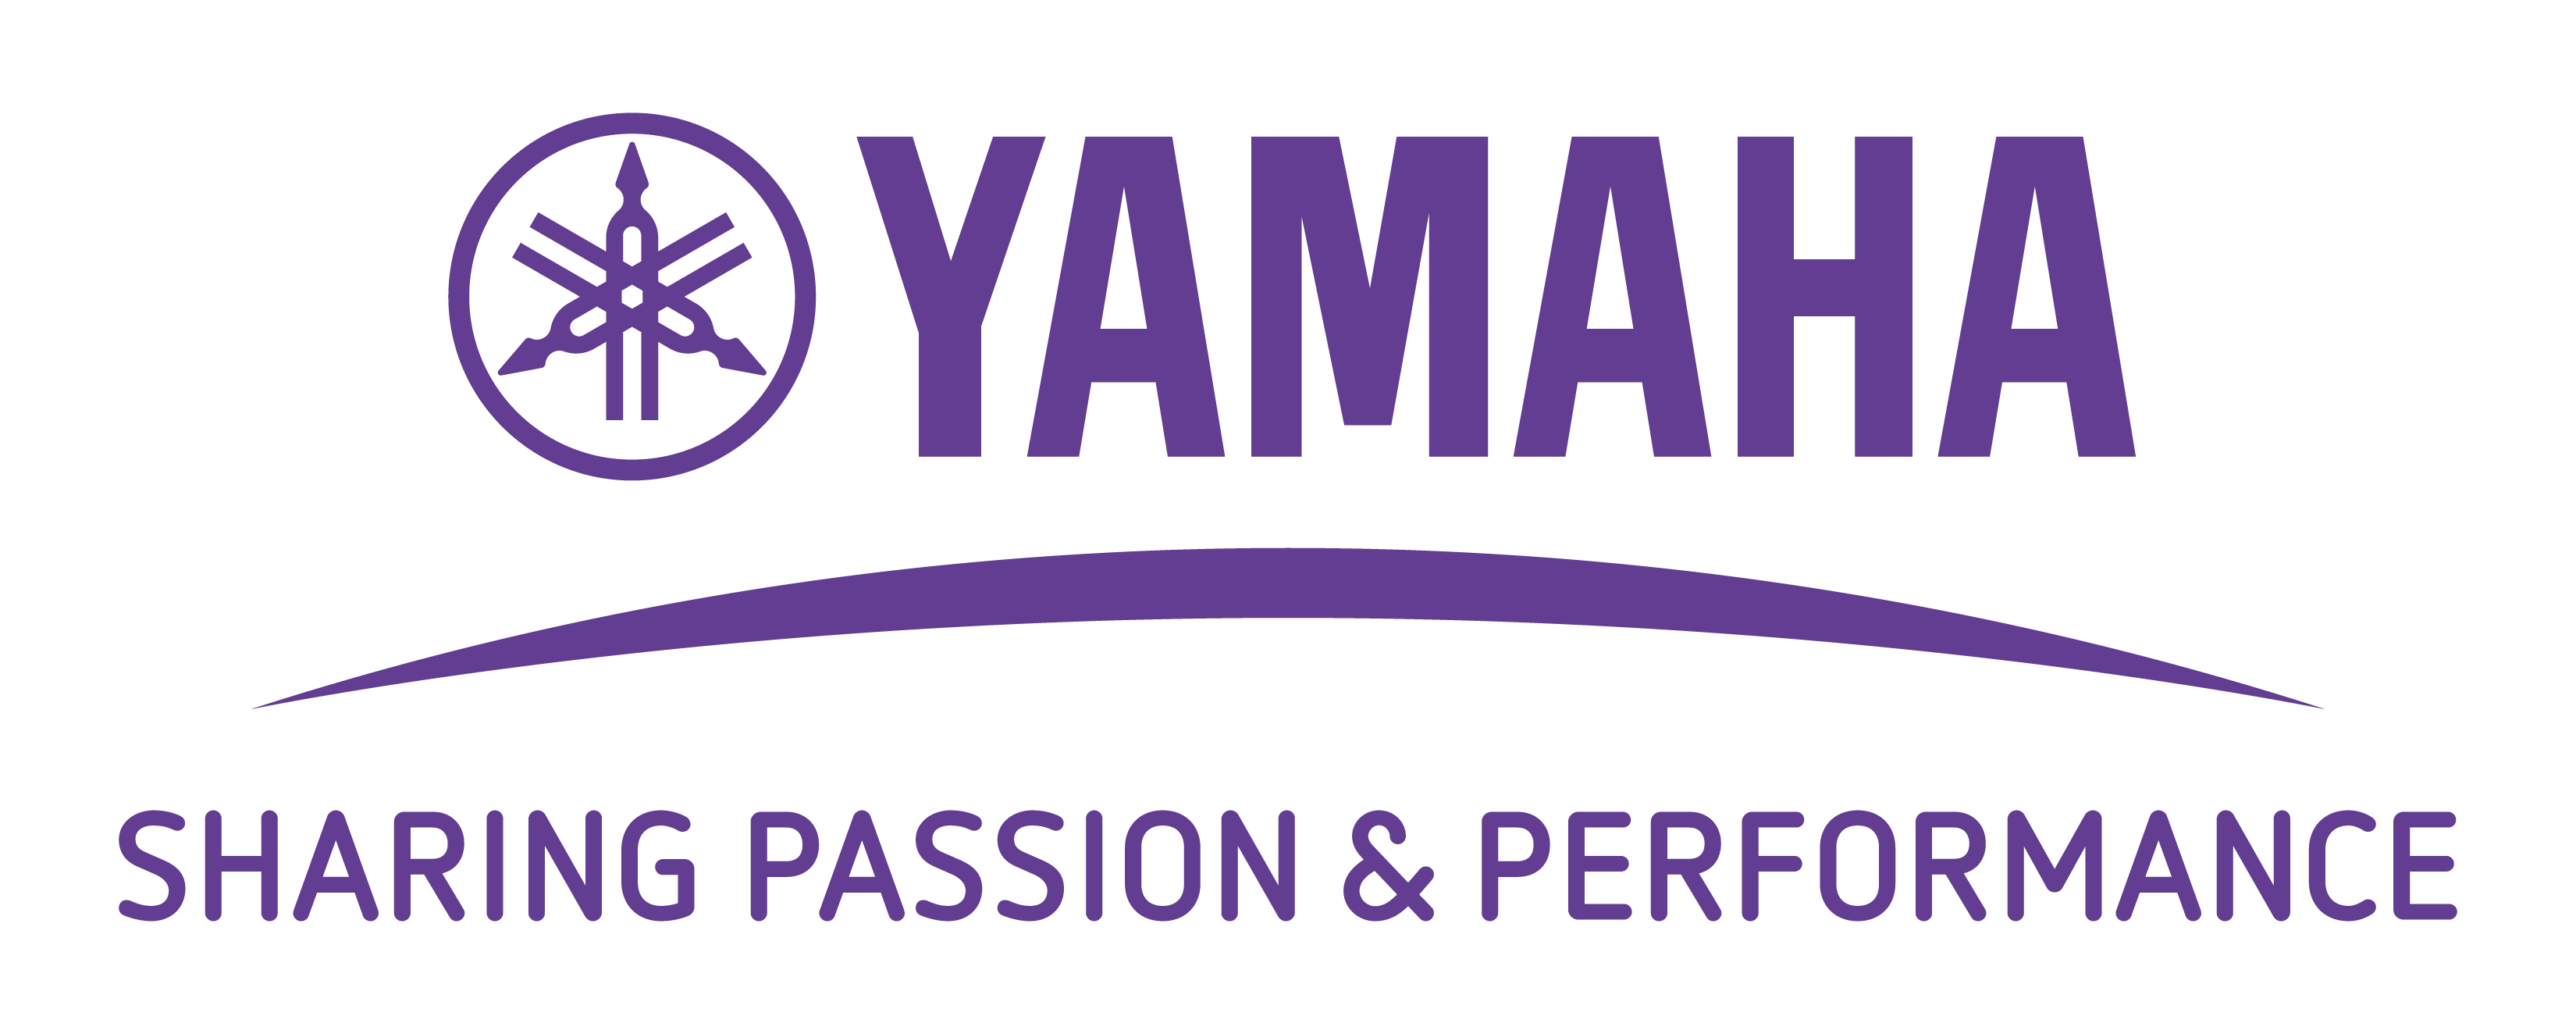 Logos Yamaha Corp Aplicaciones-01